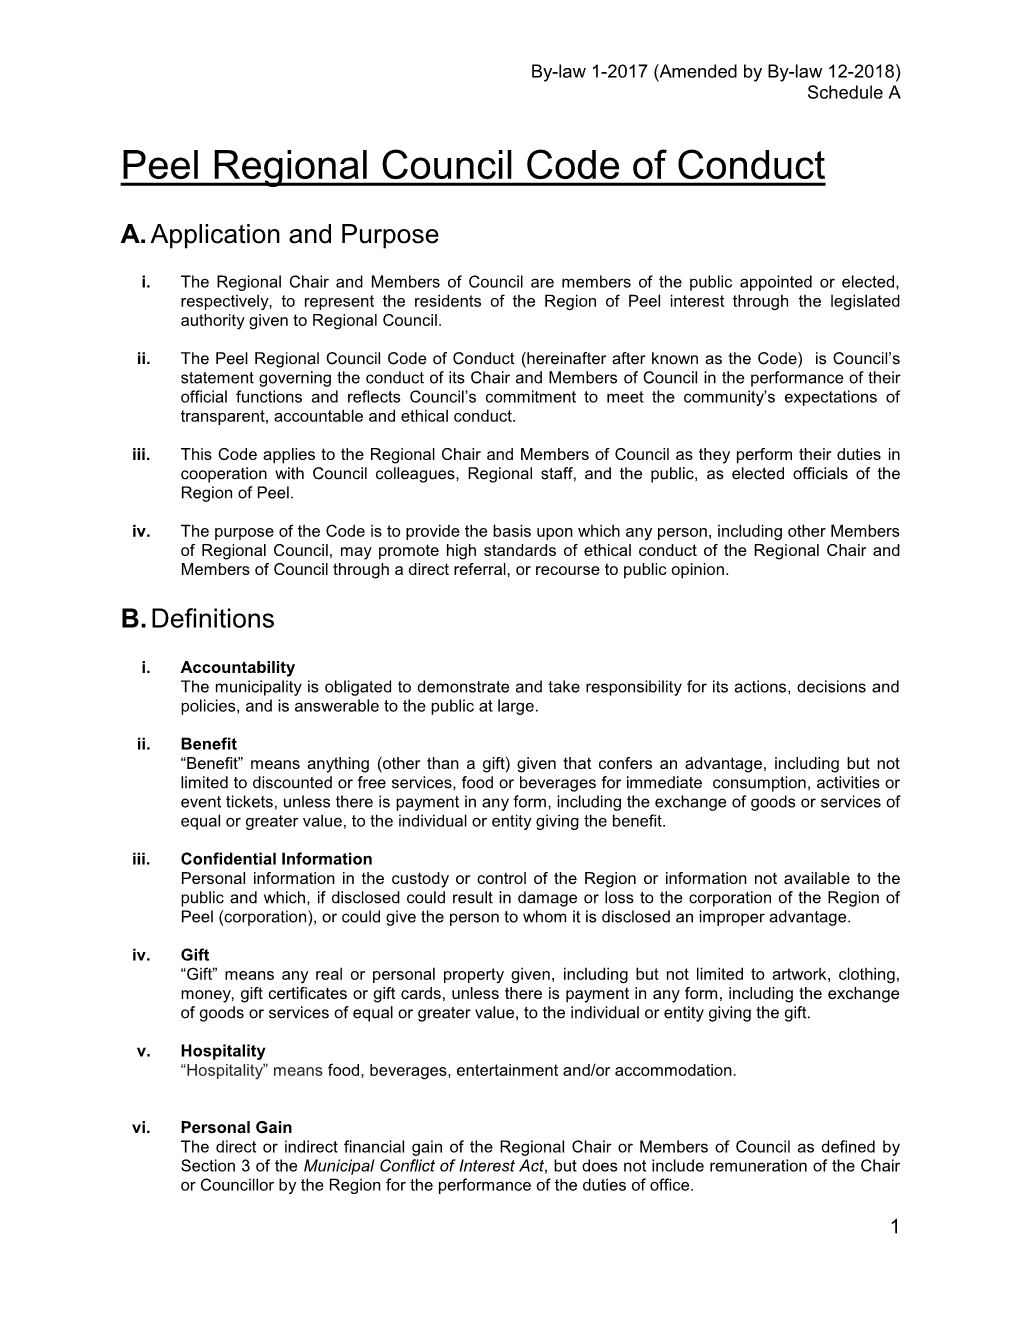 Peel Regional Council Code of Conduct